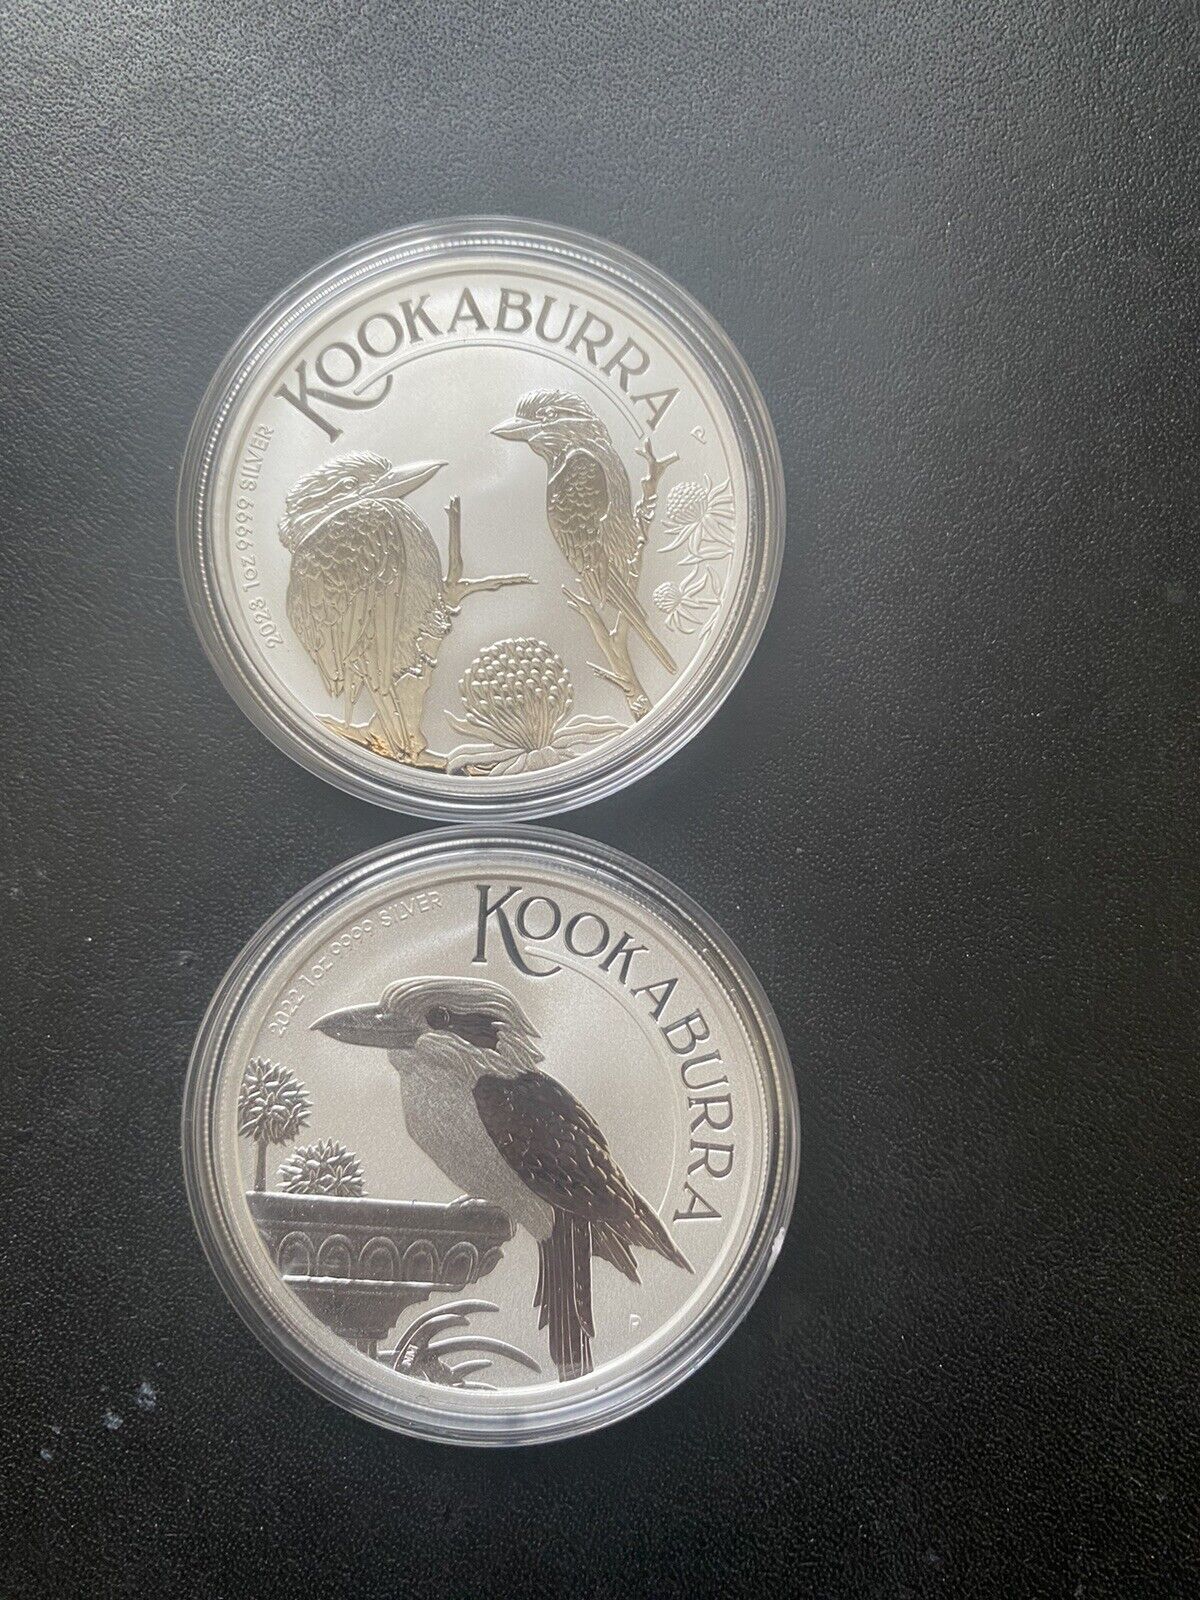 2022-2023-1 oz kookaburra silver coin- MINT